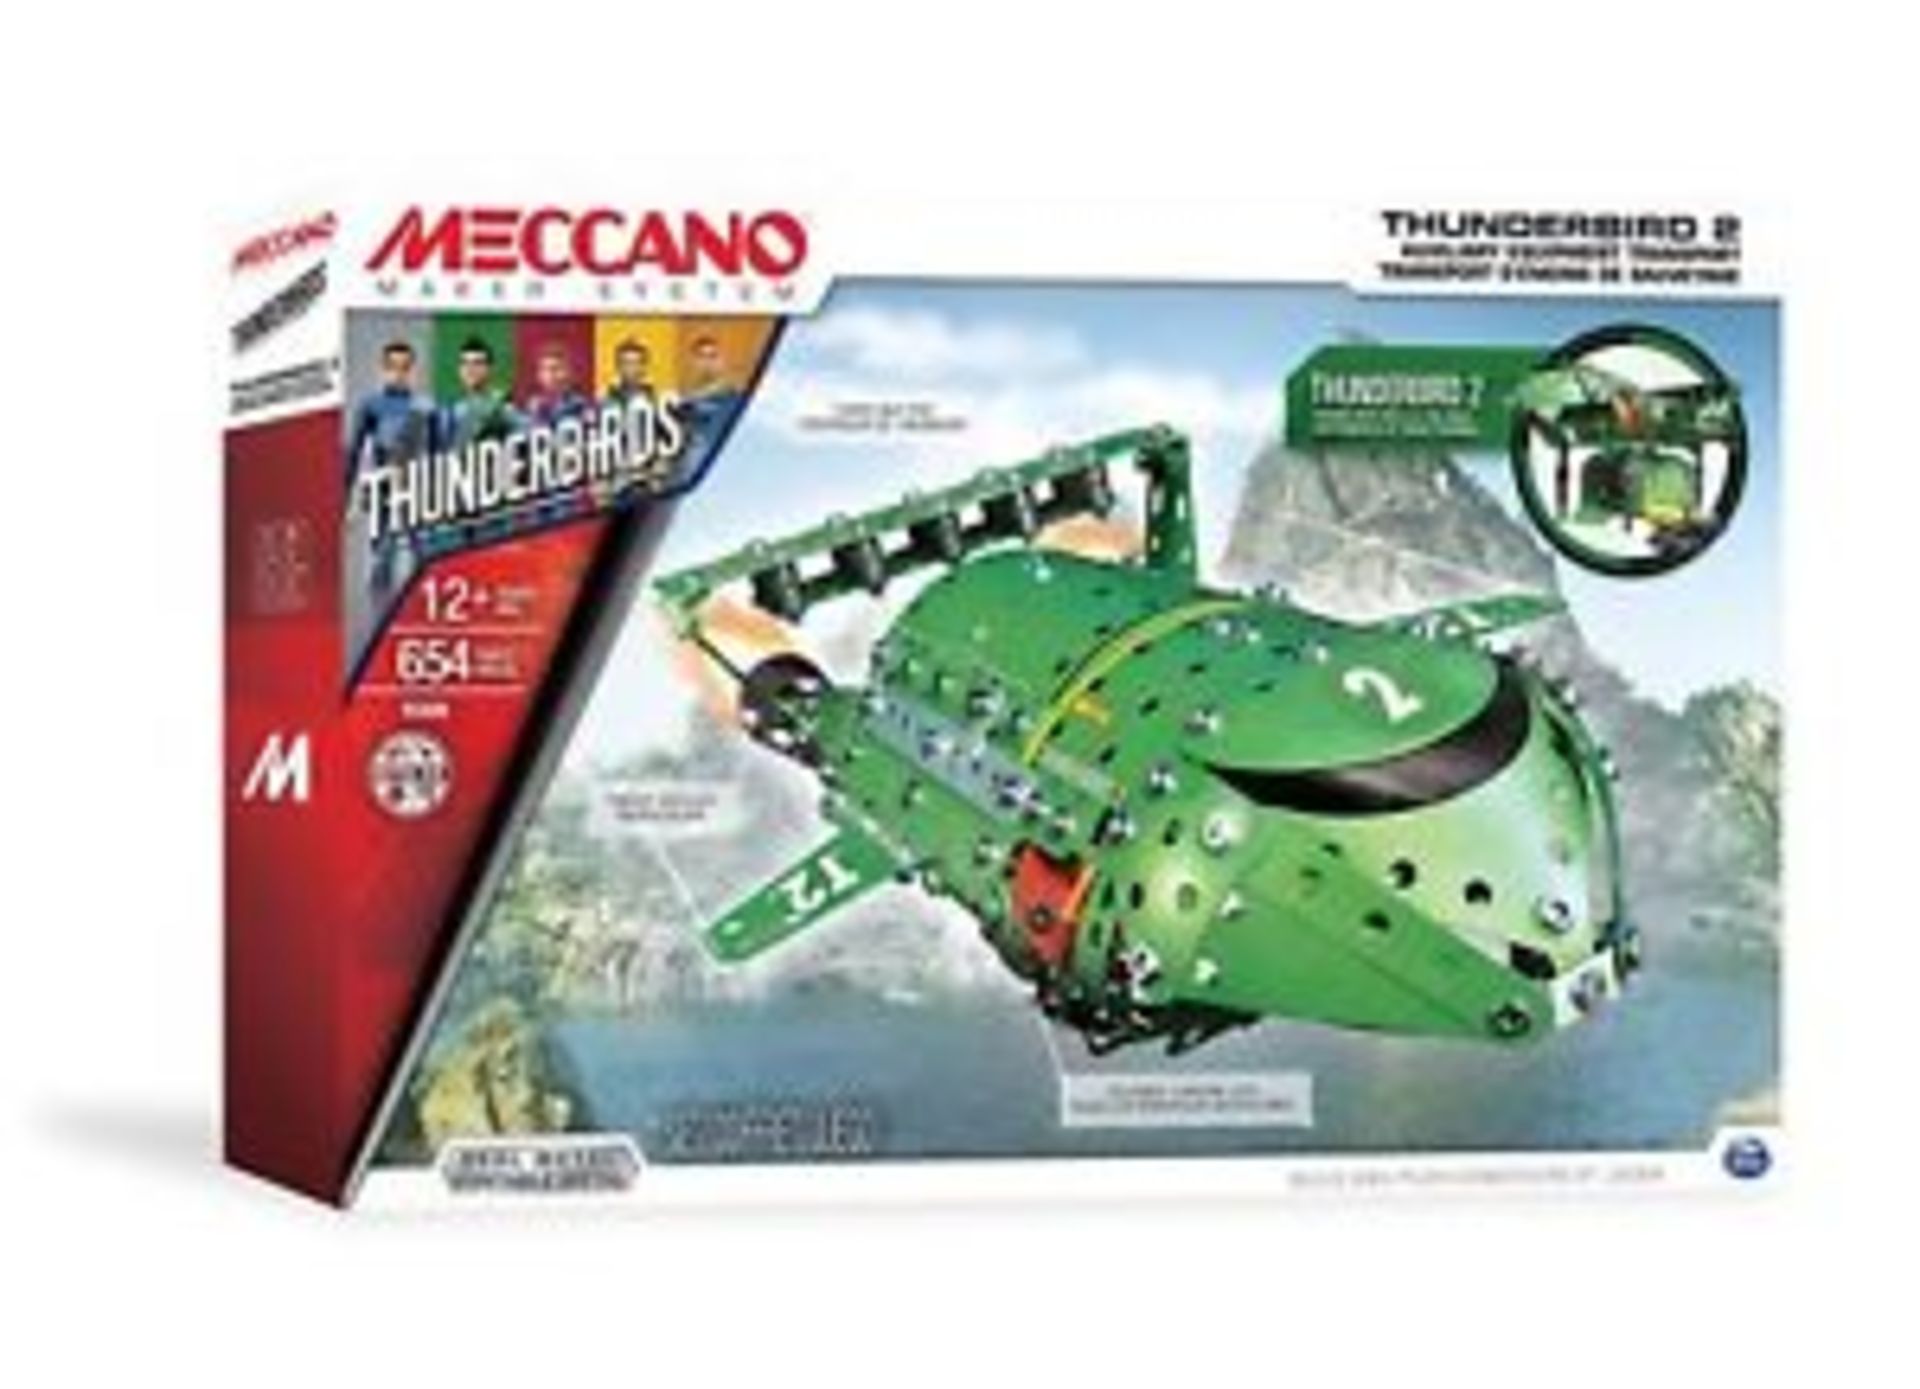 V Brand New Meccano Maker System Thunderbird 2 - Includes Pod 2 & The Mole - 627 Parts - eBay - Image 2 of 2